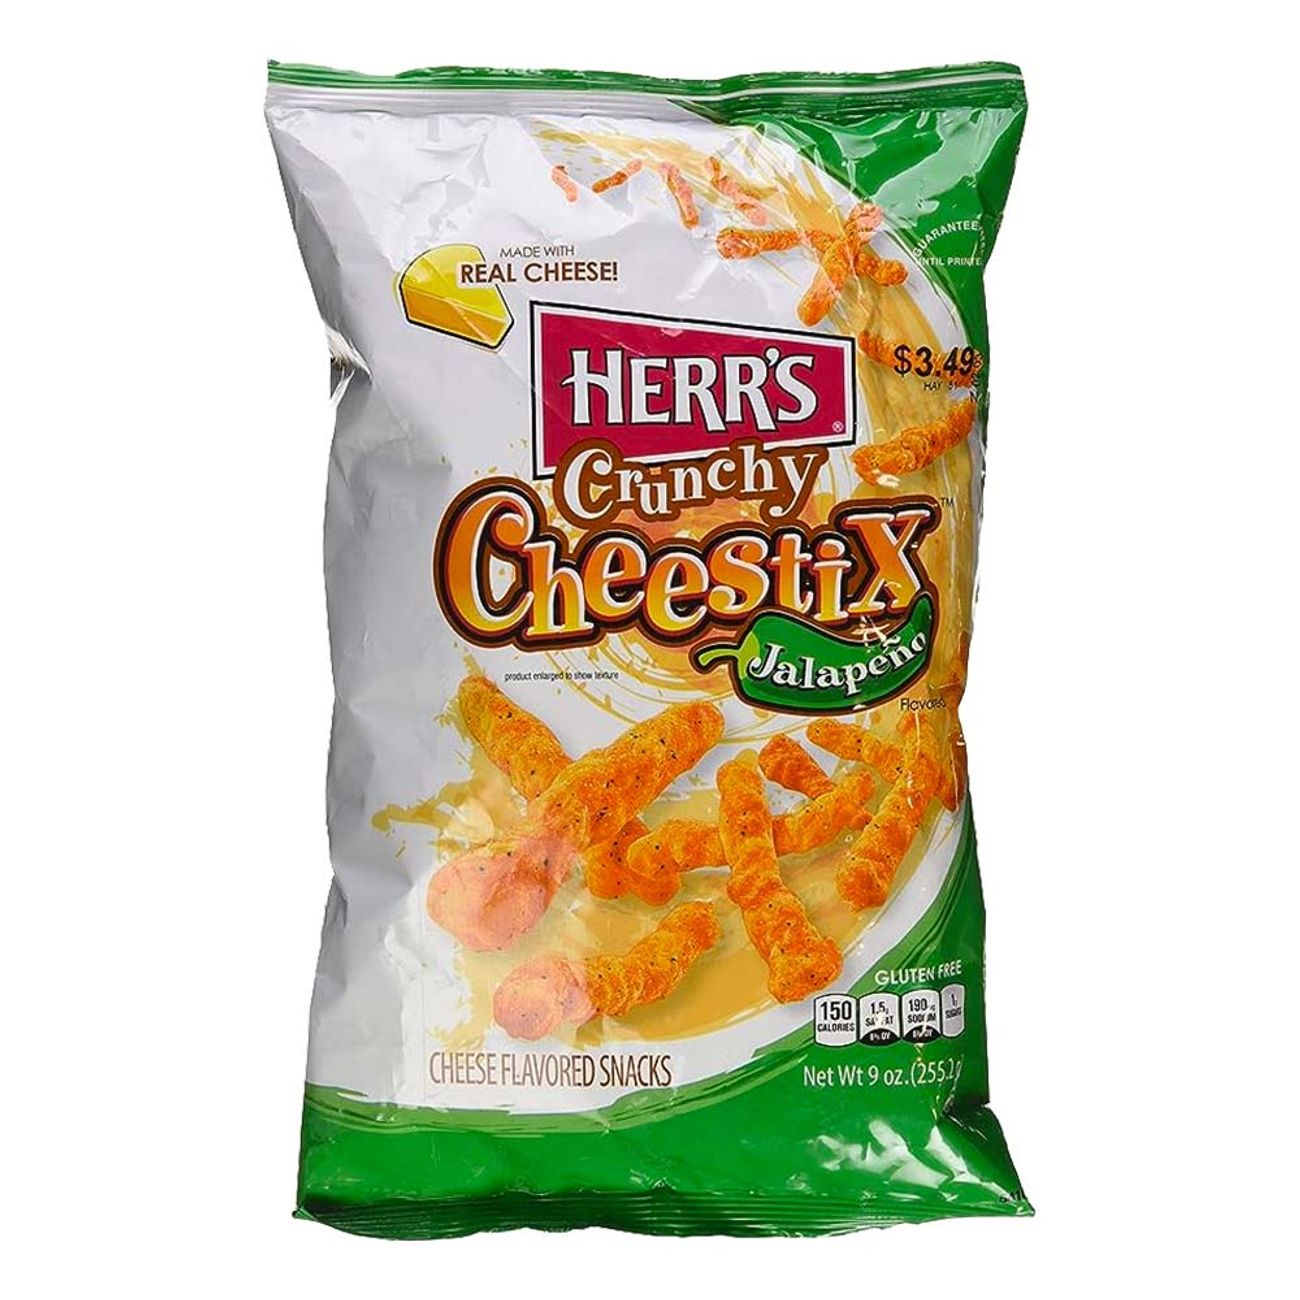 herrs-crunchy-cheestix-jalapeno-96975-1